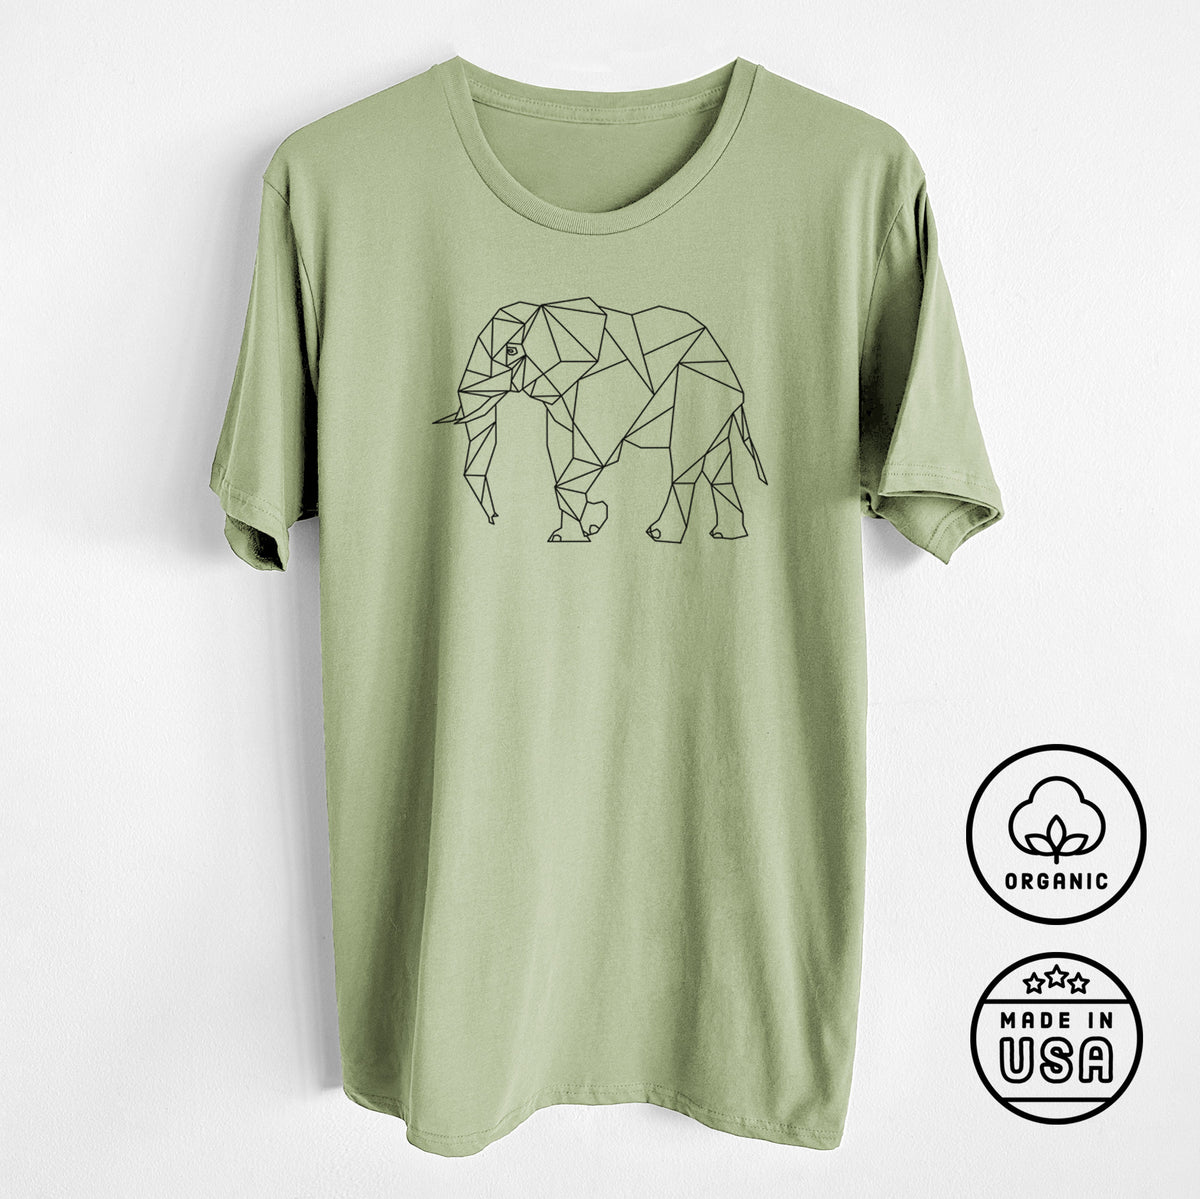 Geometric Elephant - Unisex Crewneck - Made in USA - 100% Organic Cotton